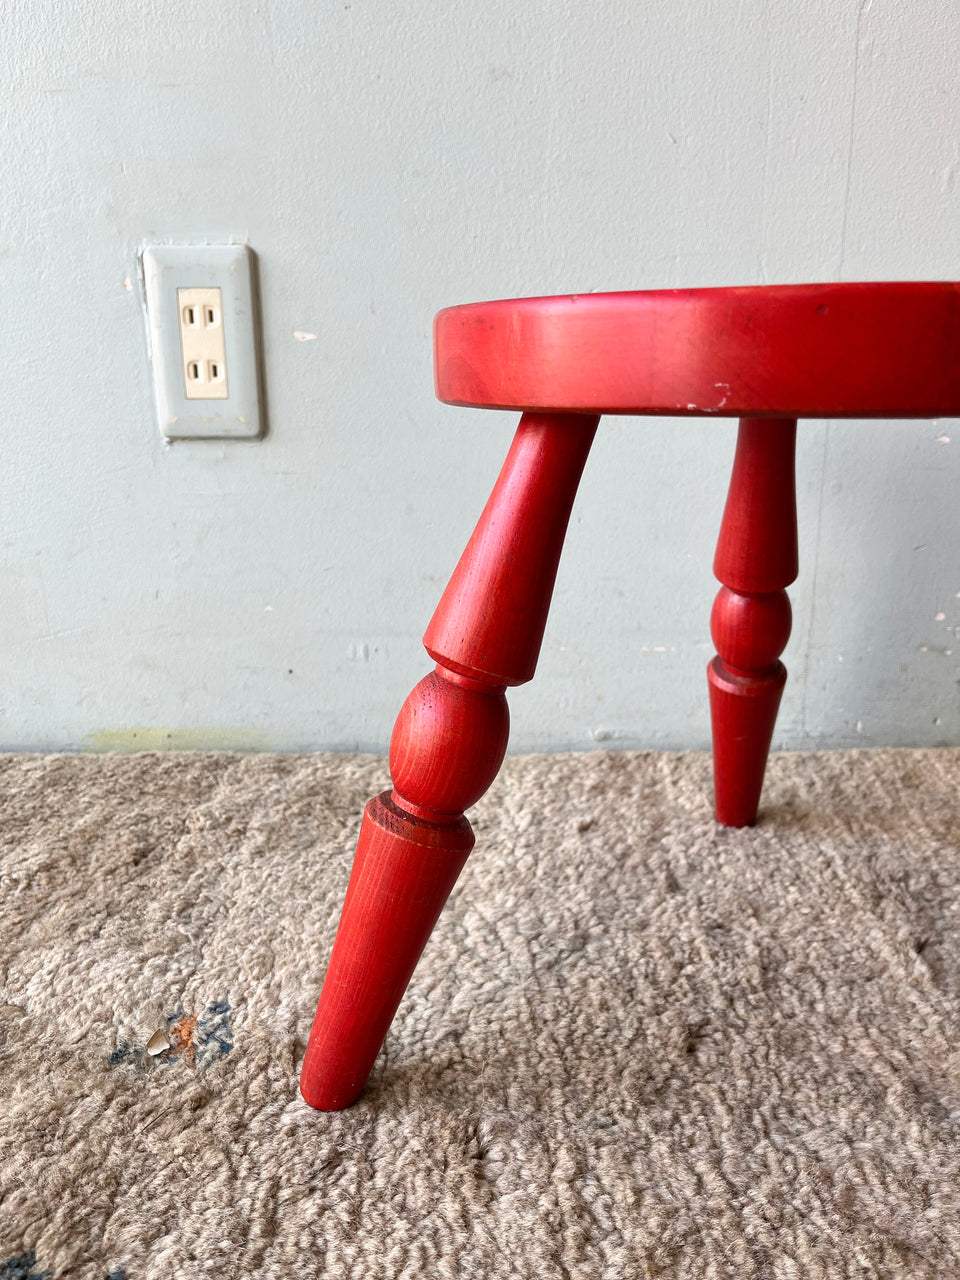 HIDA Milk Stool Red Japanese Modern/飛騨産業 ミルクスツール キツツキマーク 花台 椅子 ヴィンテージ